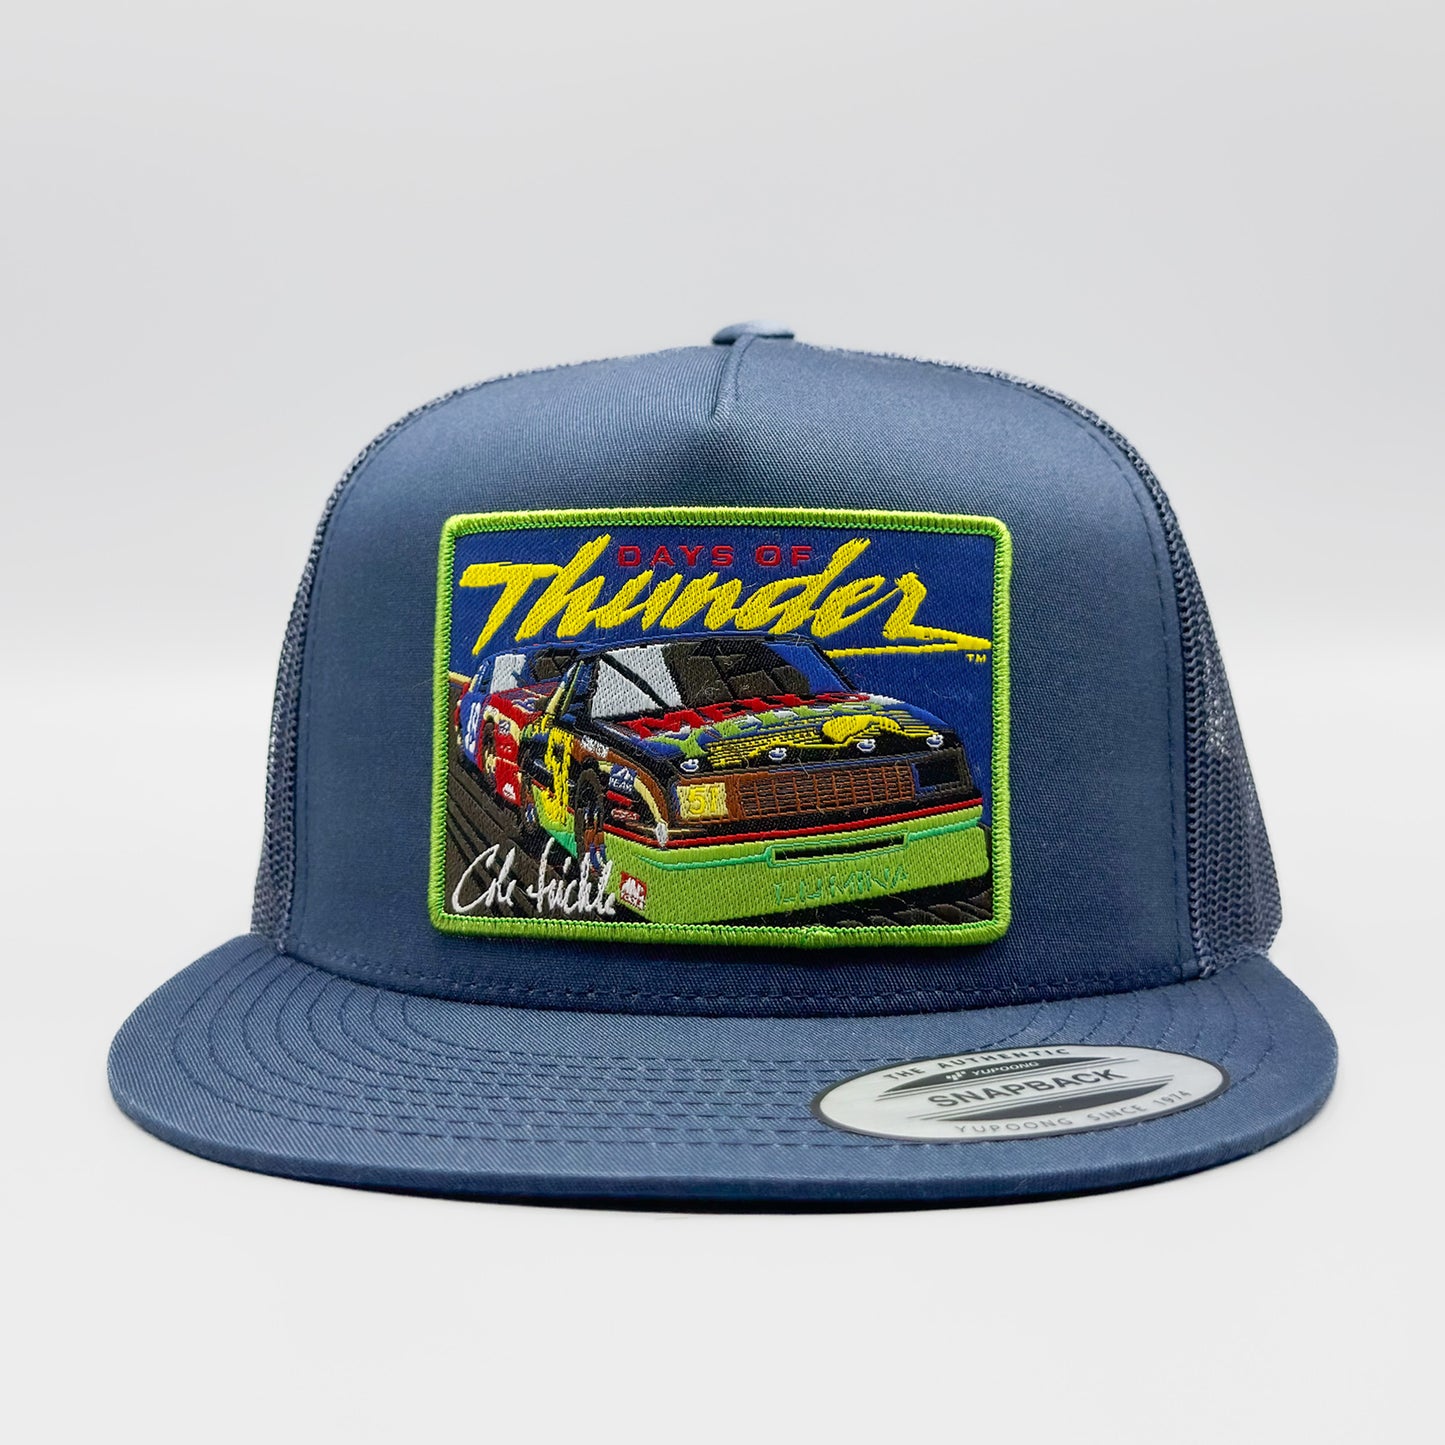 Cole Trickle Mello Yello "Days of Thunder" Trucker Hat